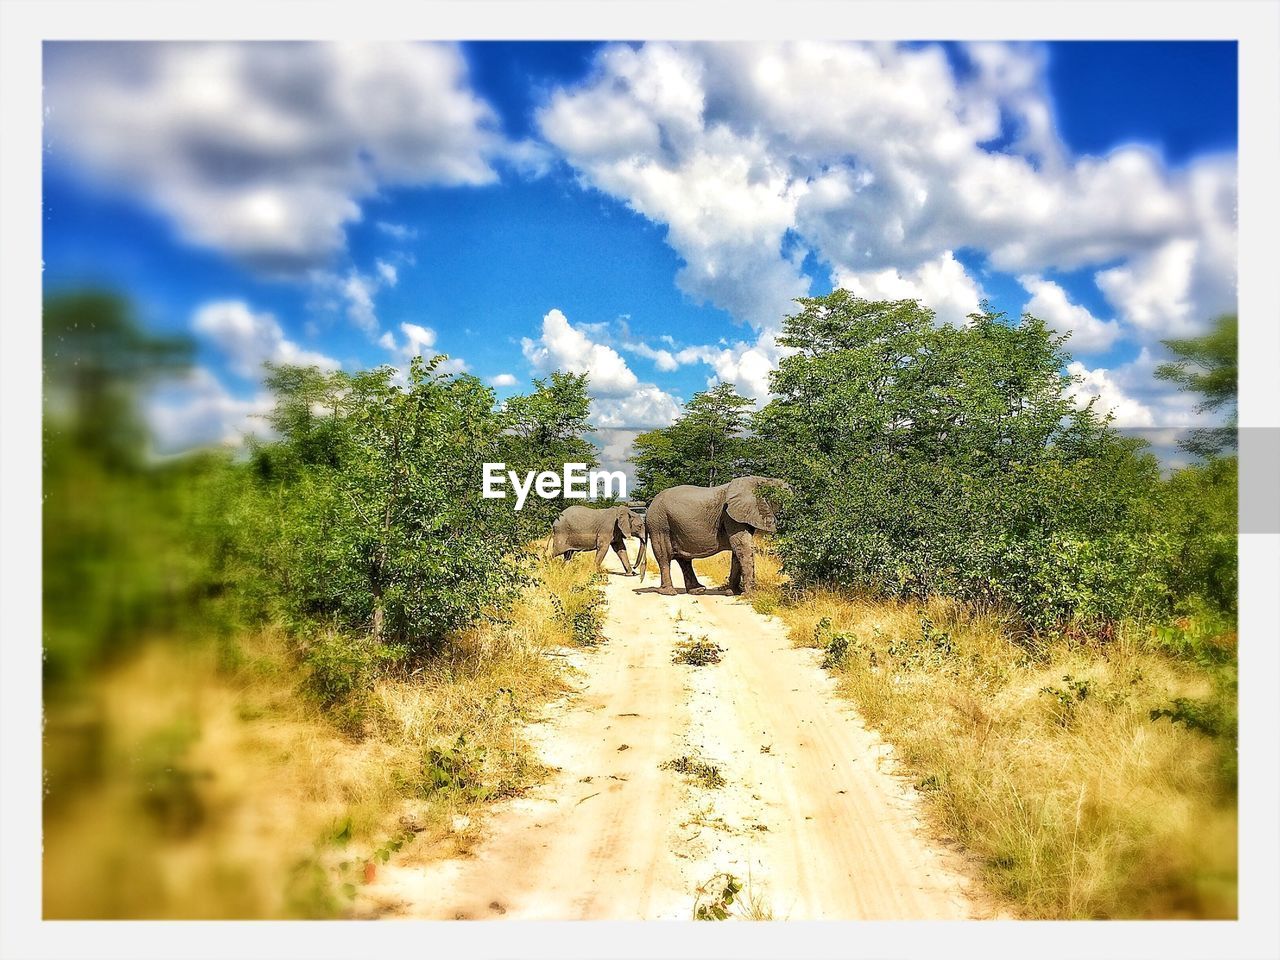 Two elephants crossing dirt road in forest